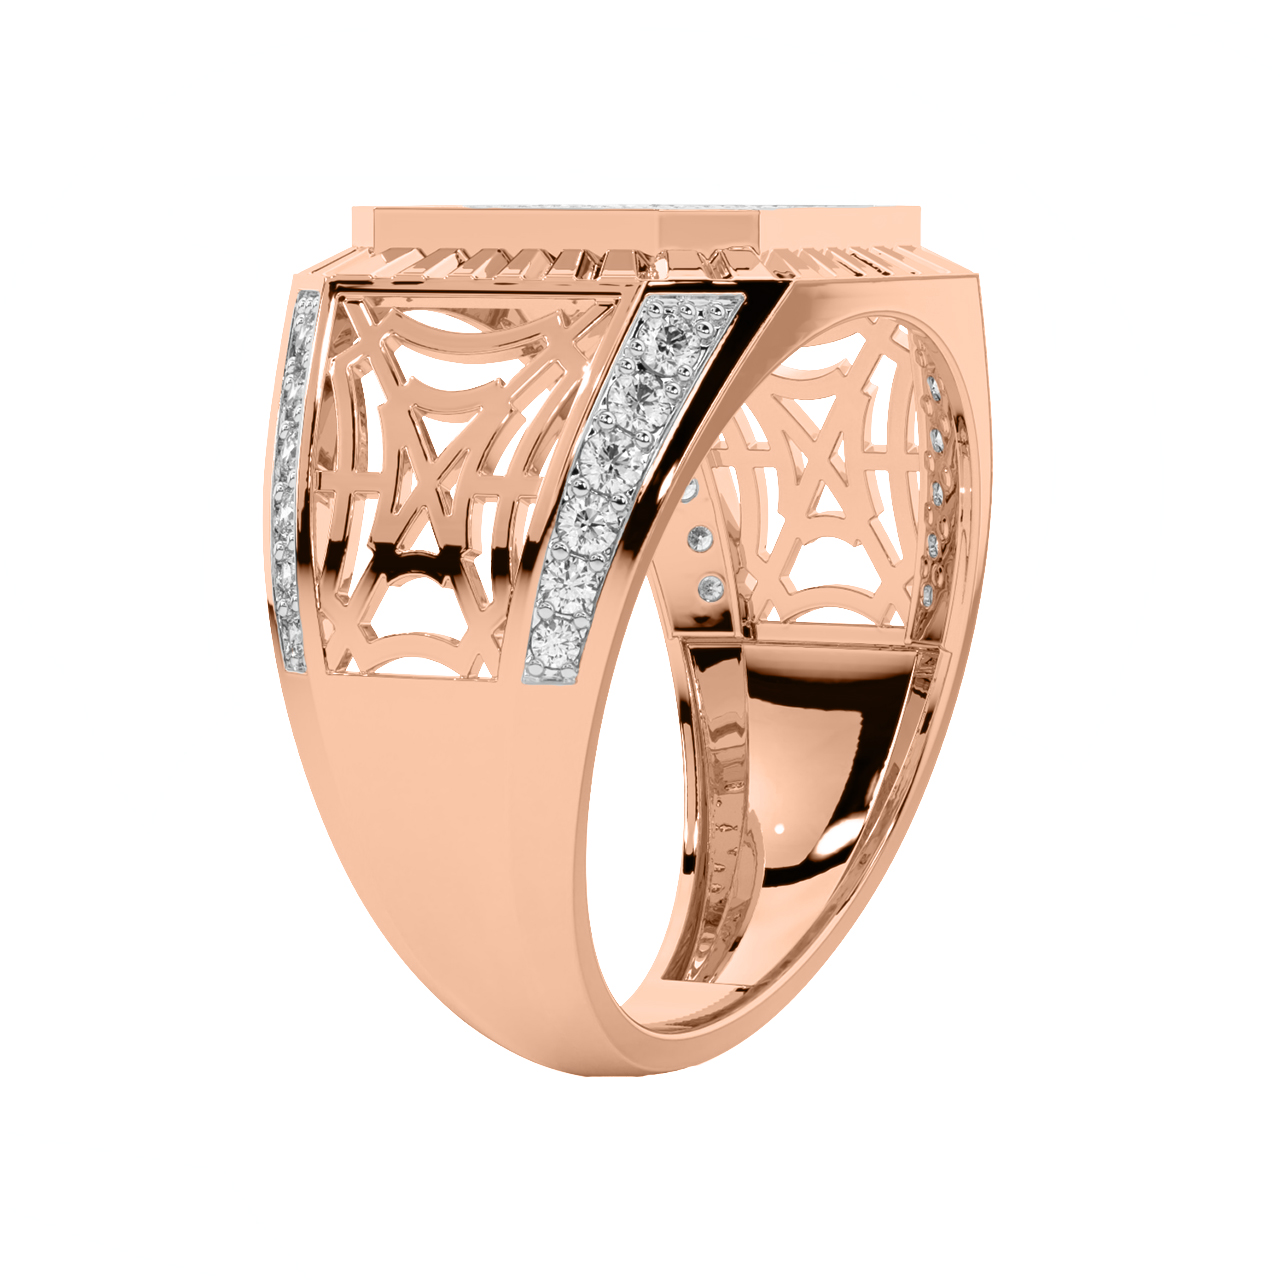 Octagon Design Ring For Men